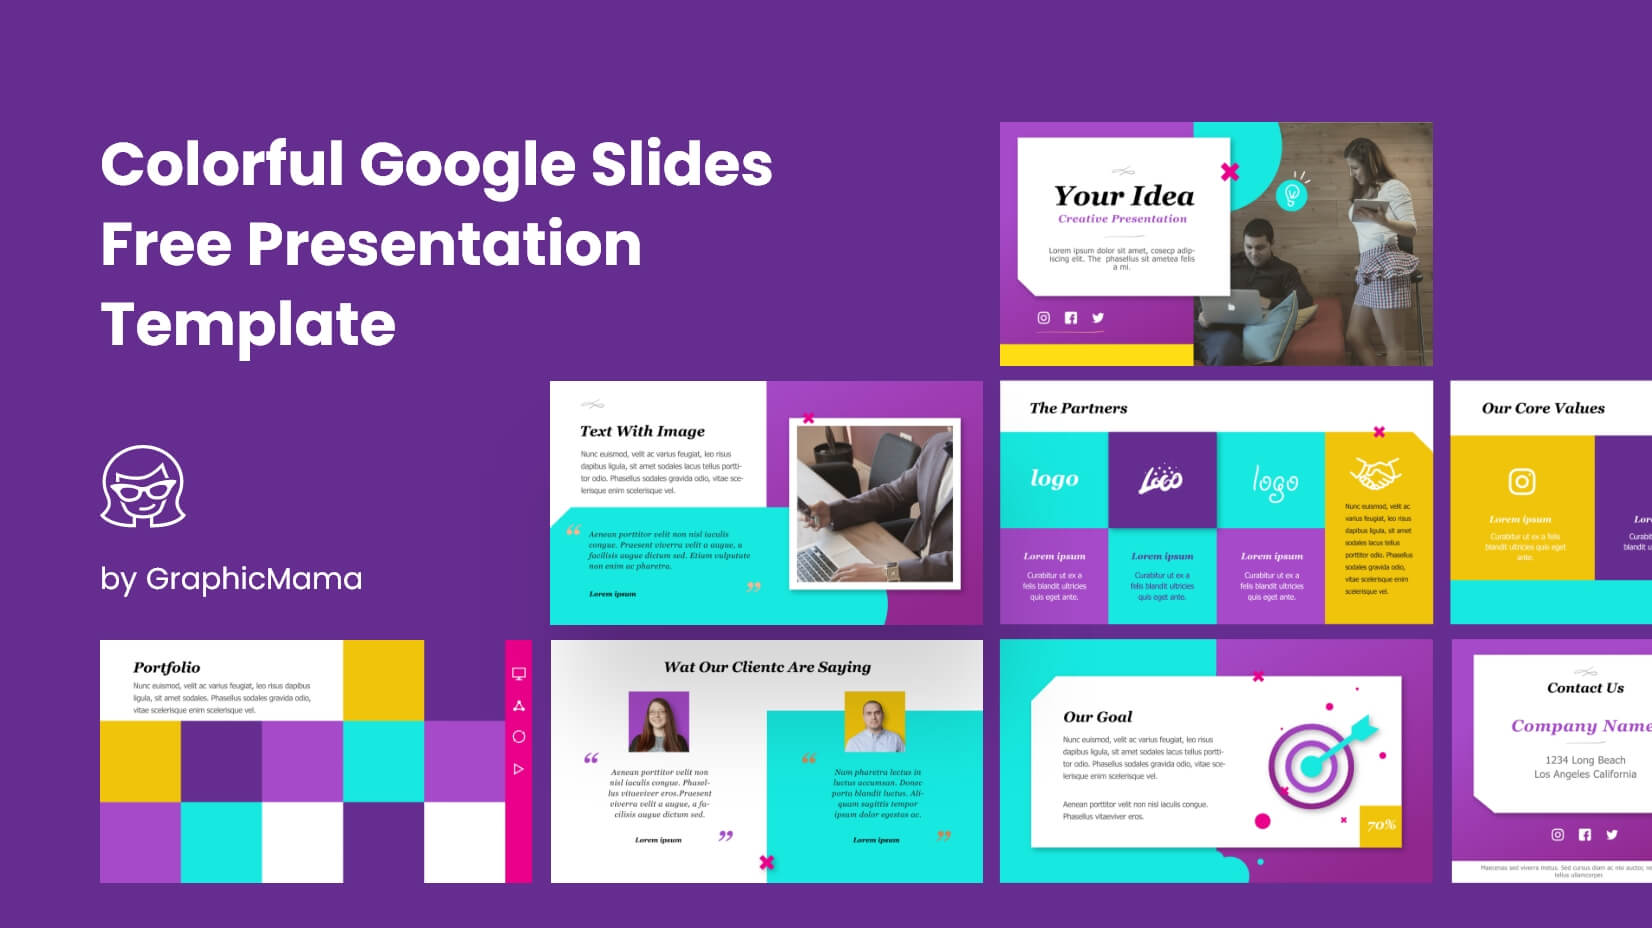 Colorful-Google-Slides-Free-Presentation-Template.jpg